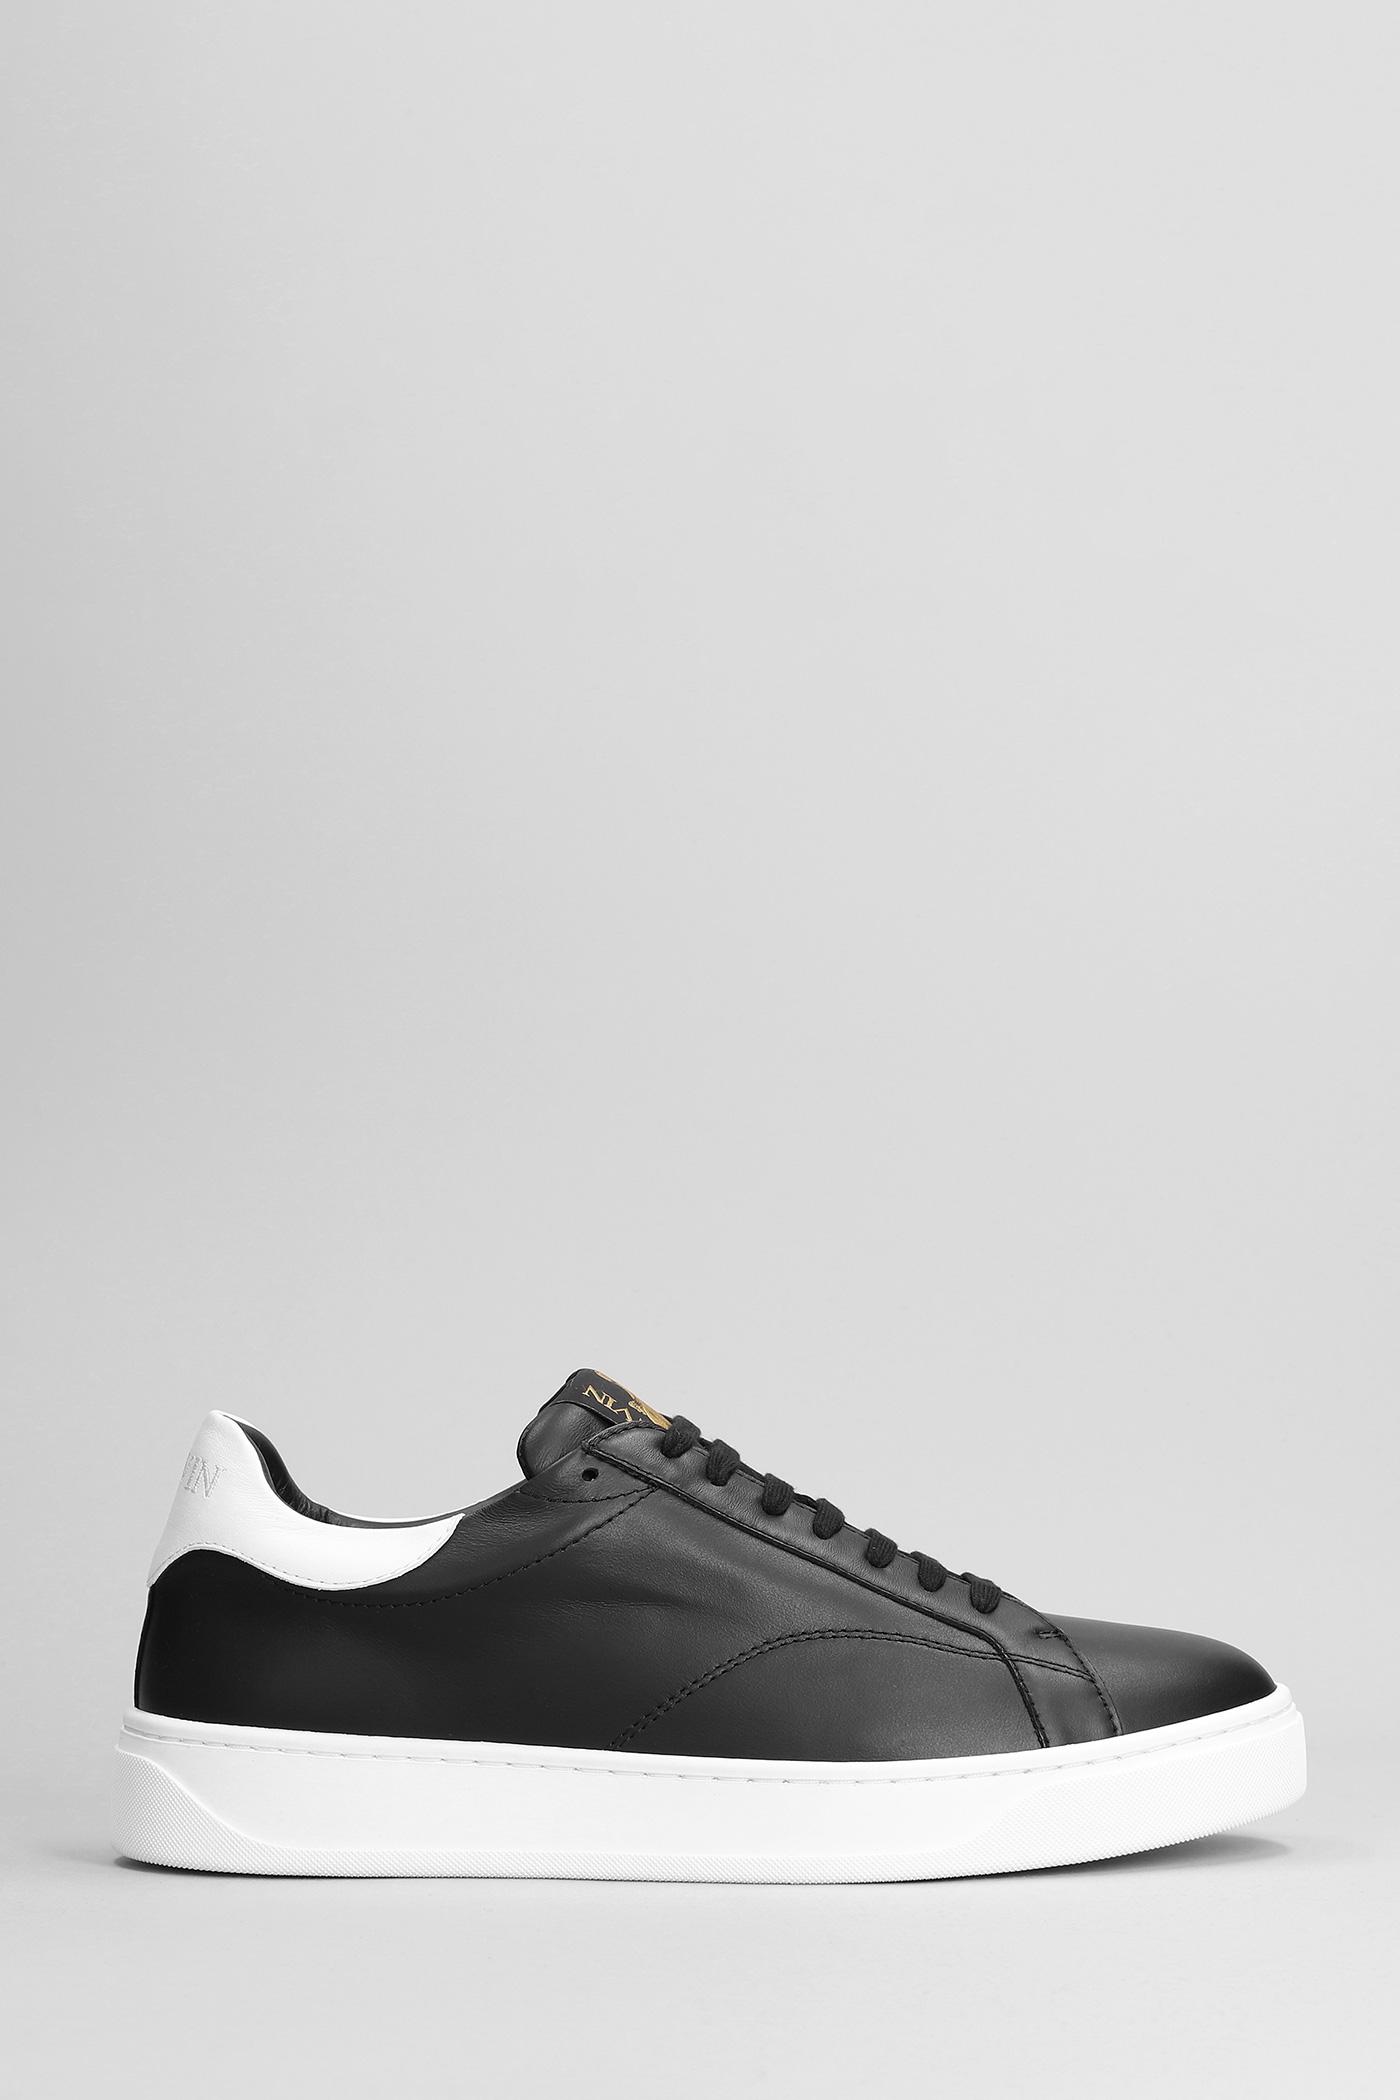 Lanvin Ddb0 Sneakers In Black Leather in Gray for Men | Lyst